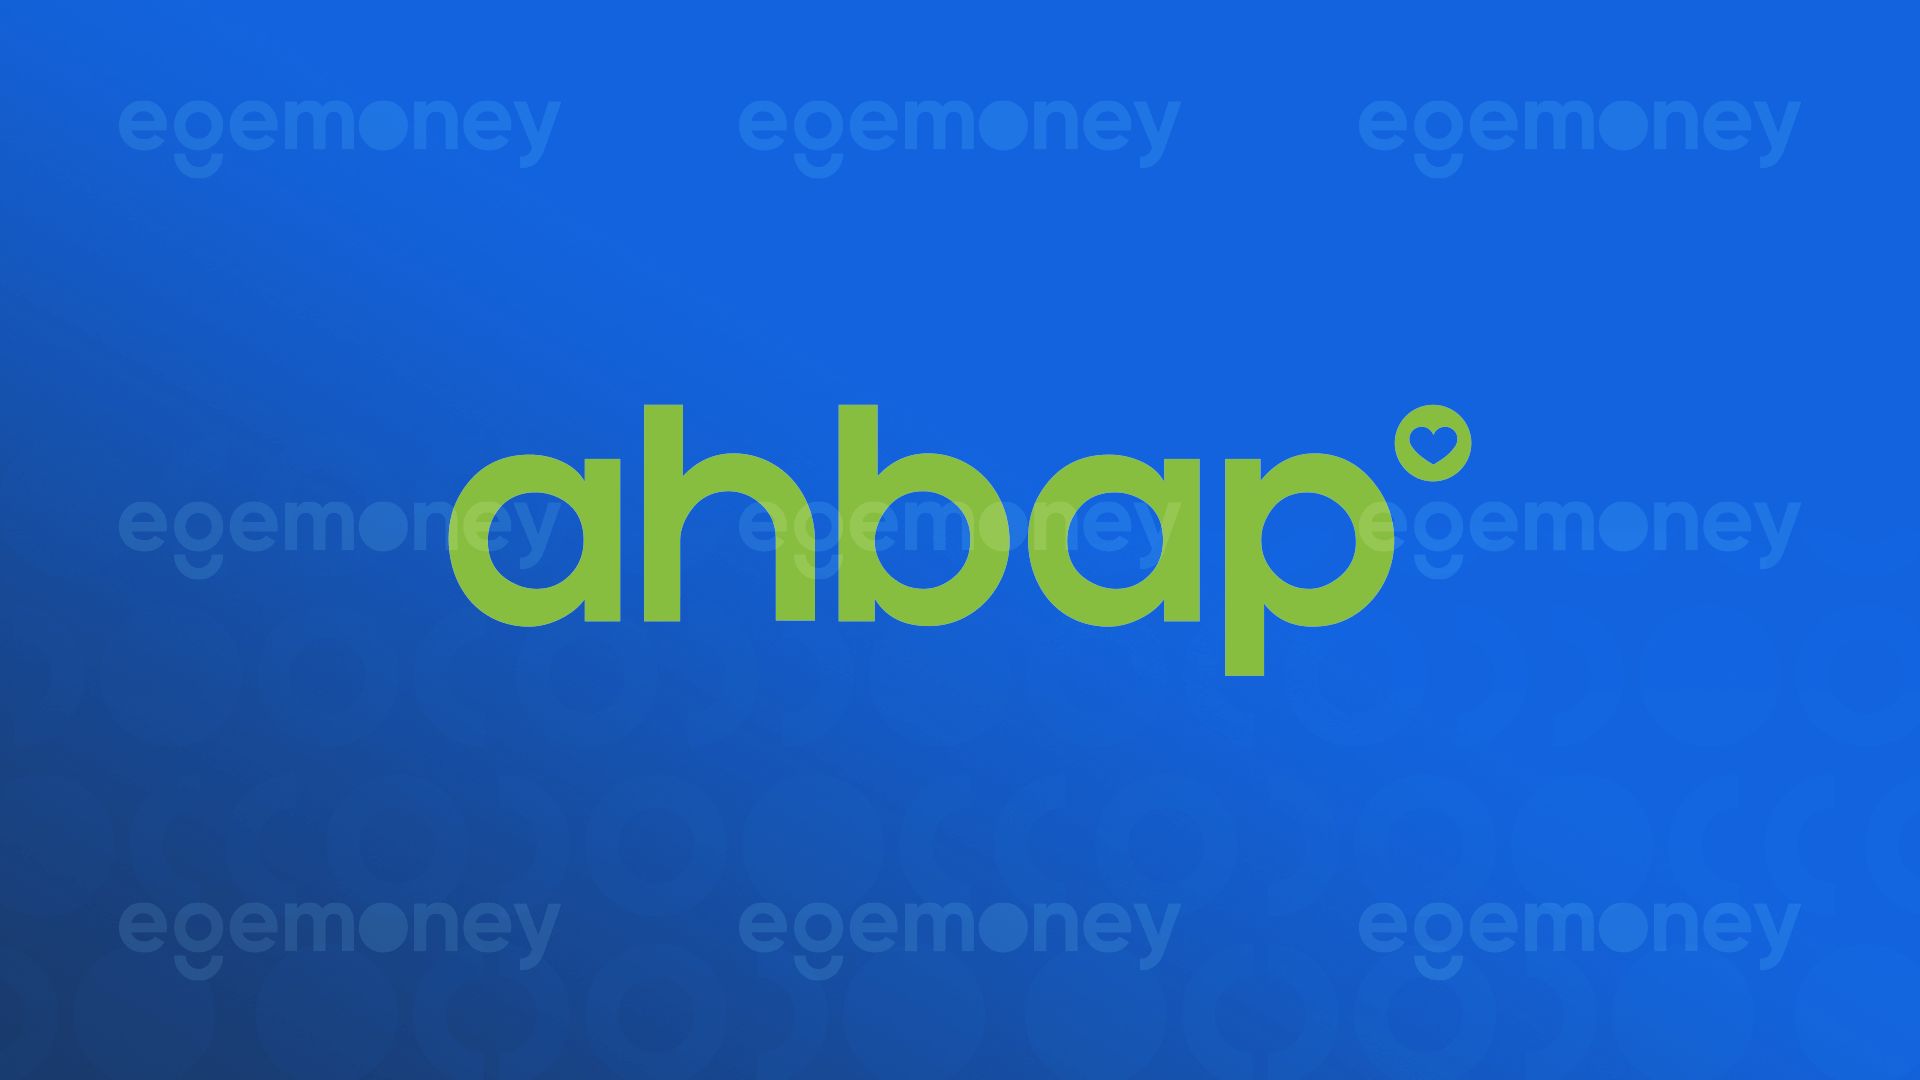 AHBAP Donate on EgeMoney